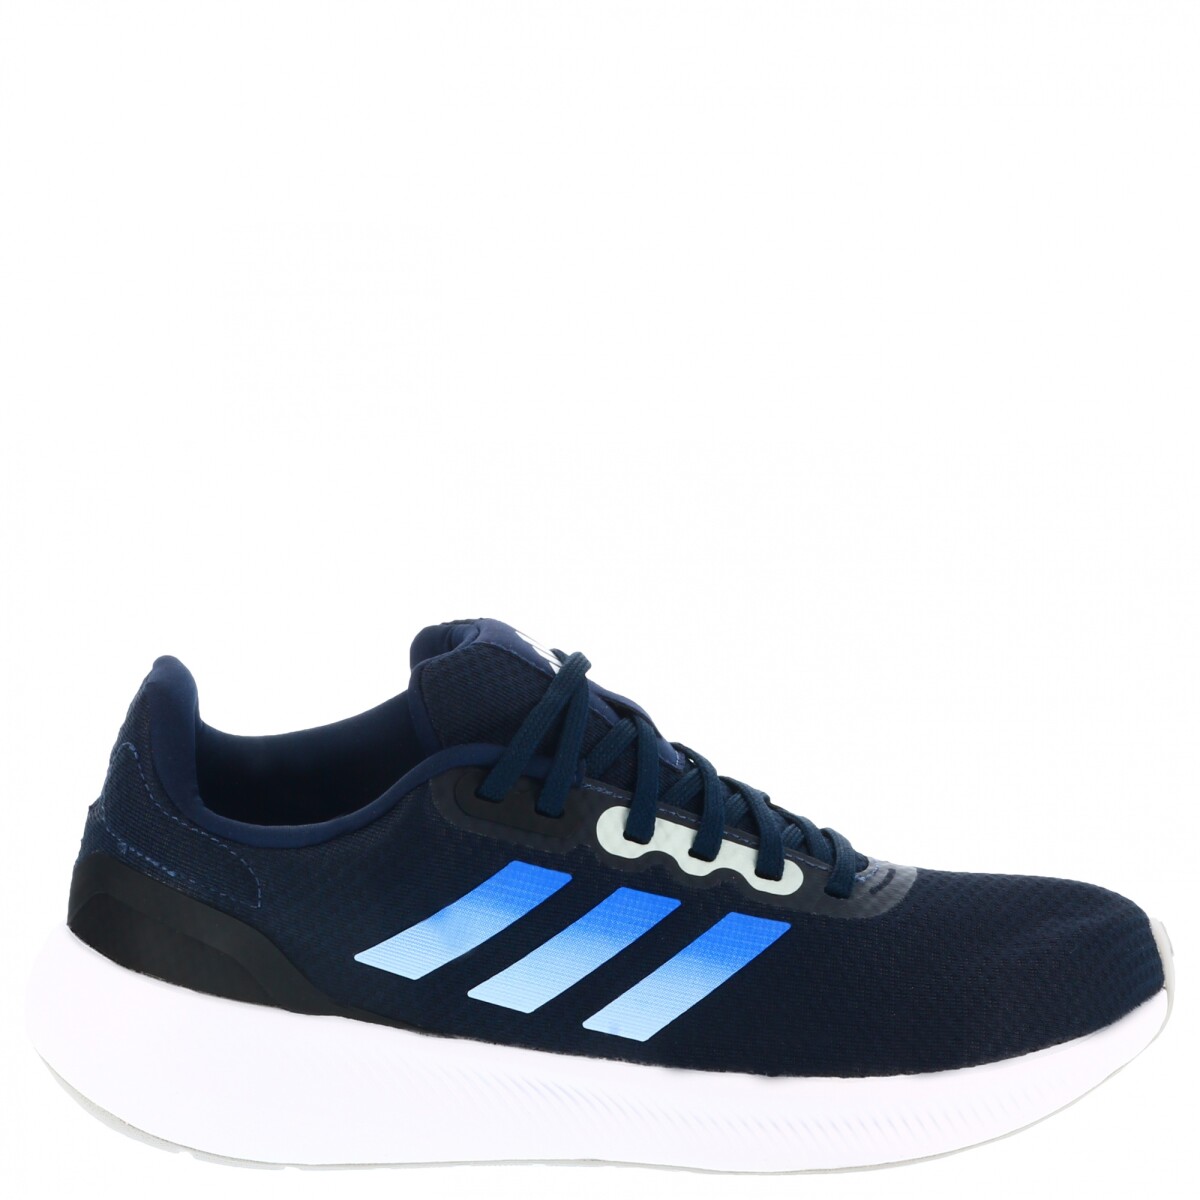 Runfalcon 3.0 Adidas - Marino/Azul/Blanco 